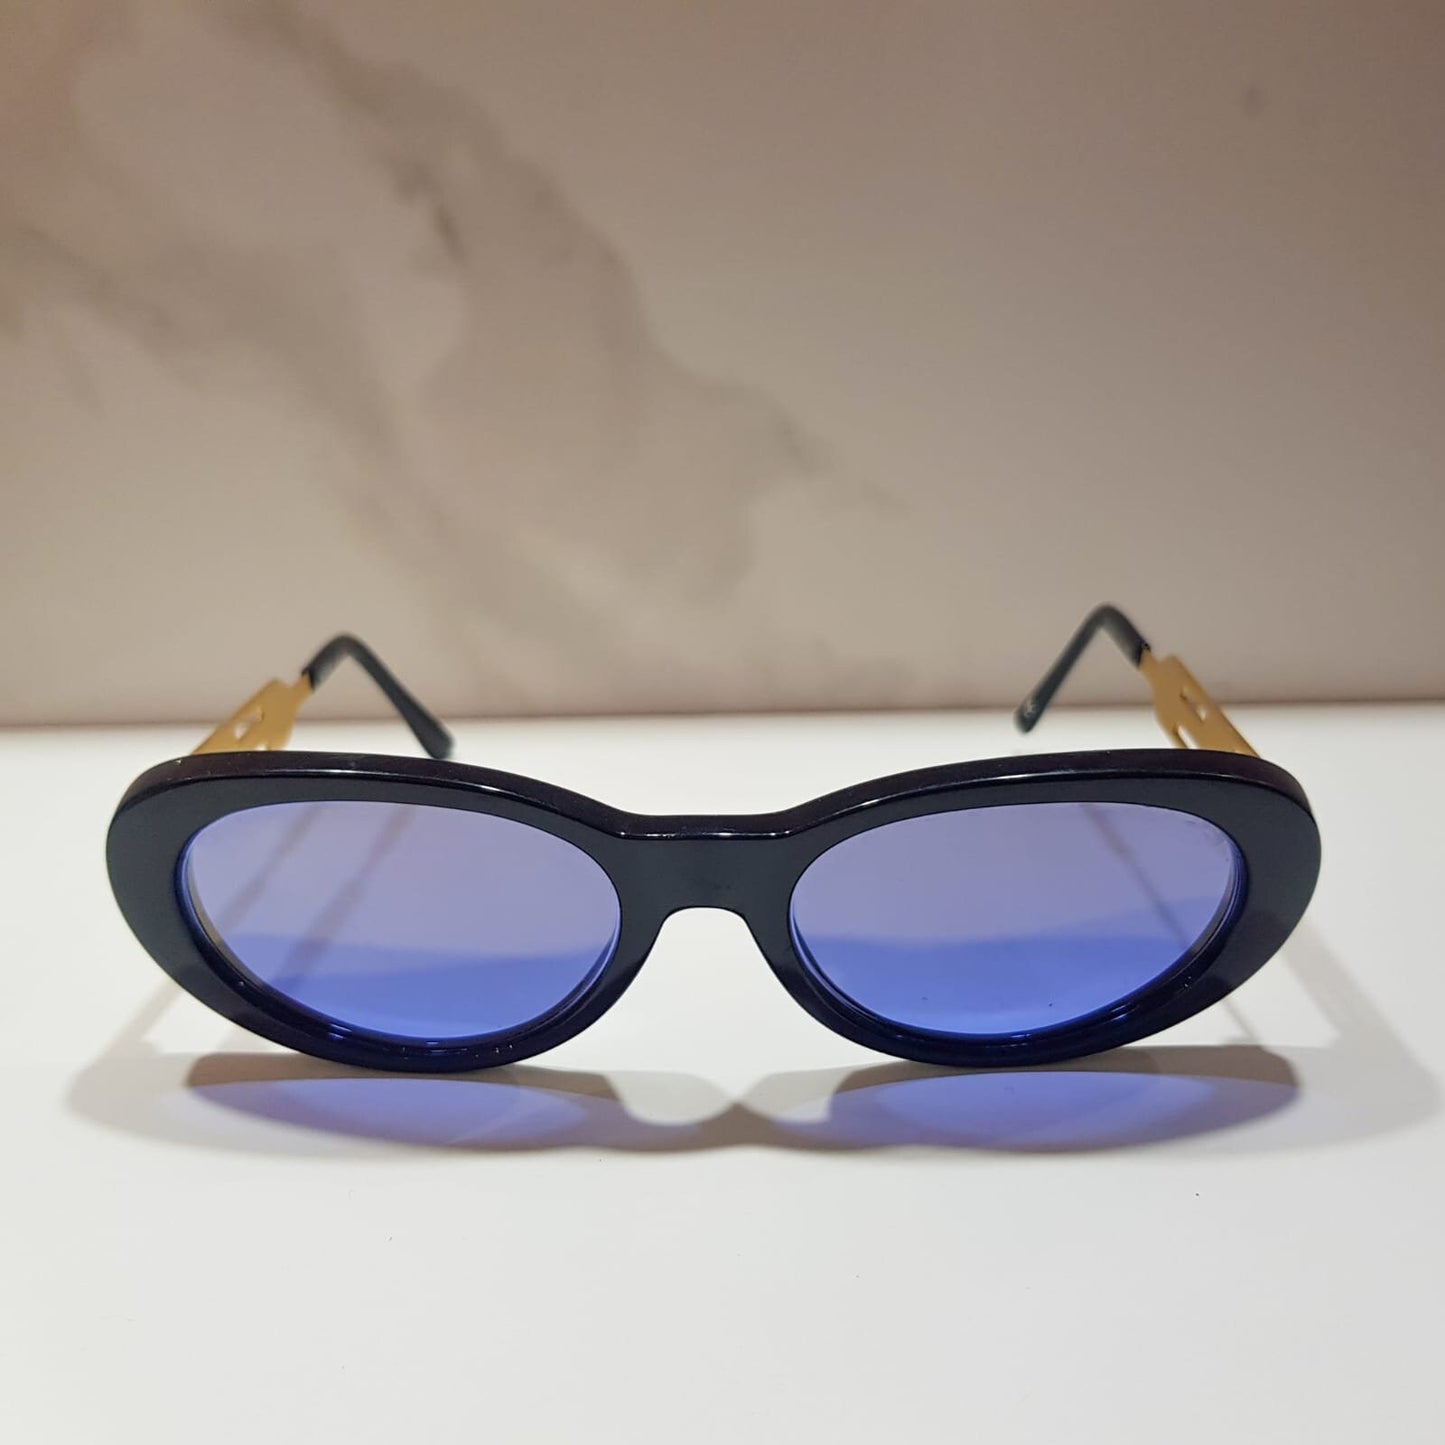 Versus Gianni Versace 90 年代太阳镜 brille lunette 眼镜 Versace